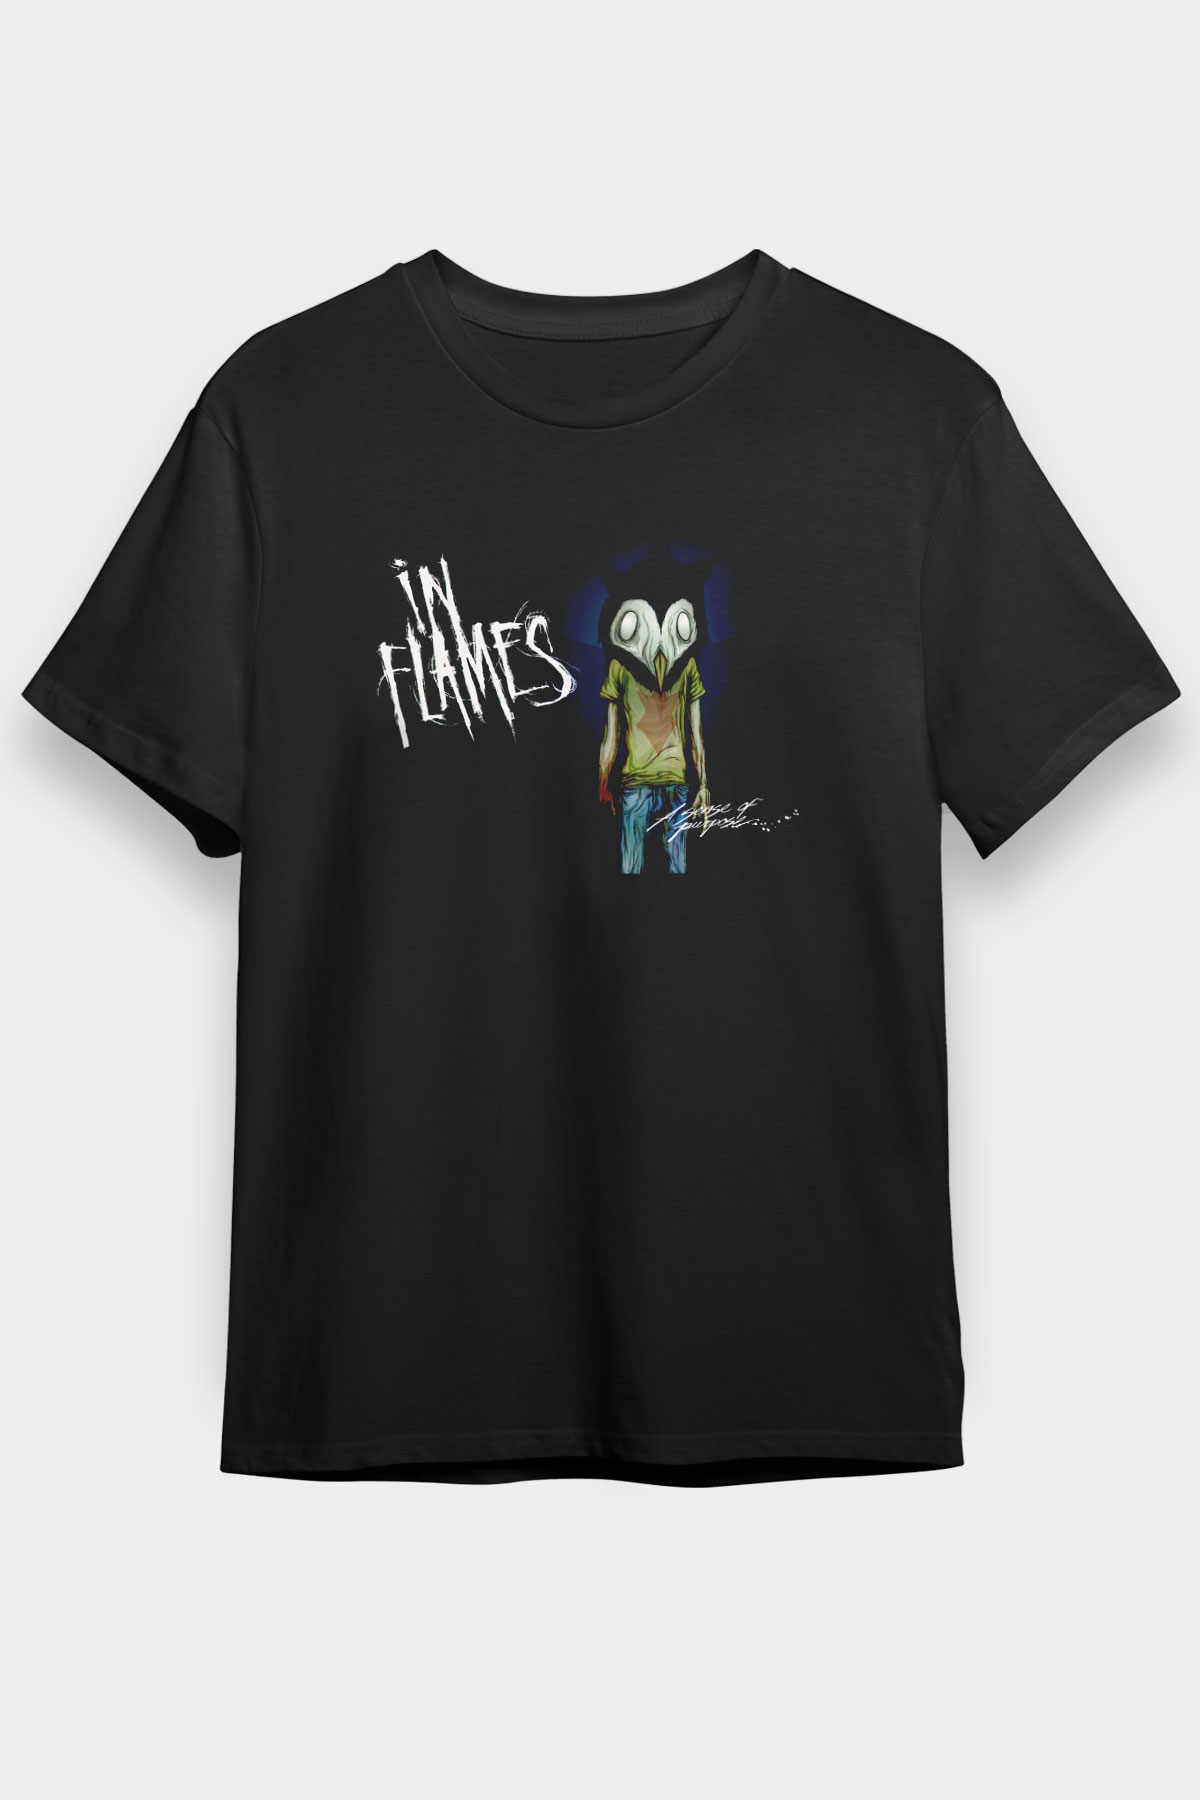 In Flames T shirt,Music Band,Unisex Tshirt 06/